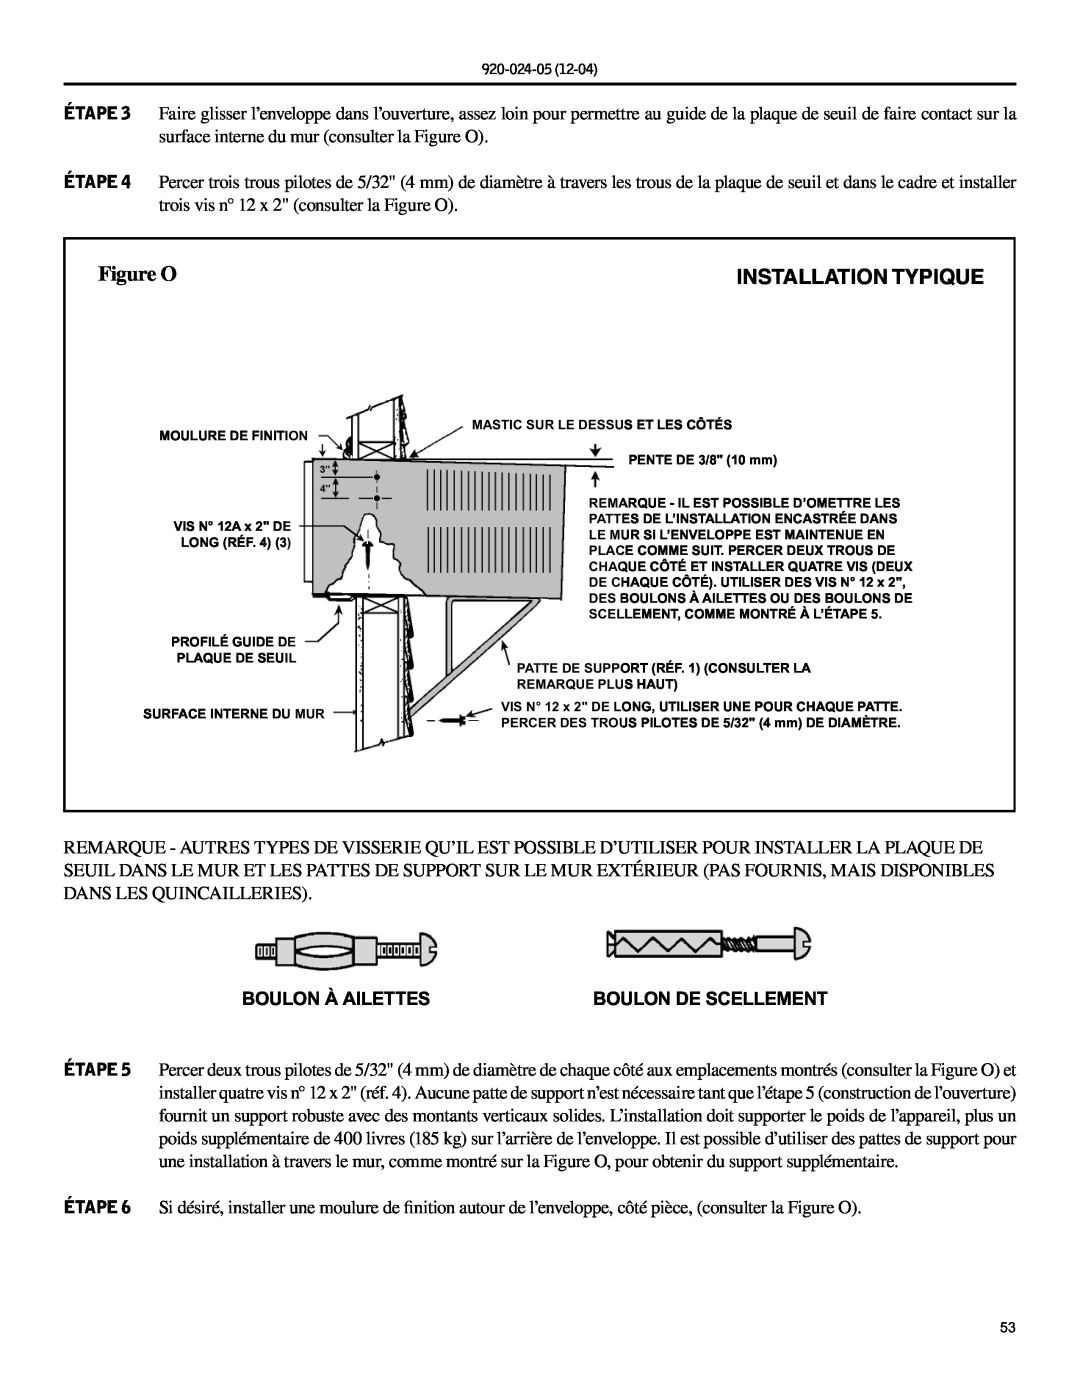 Friedrich SH20, SH15 operation manual Installation Typique, Boulon À Ailettes, Figure O 